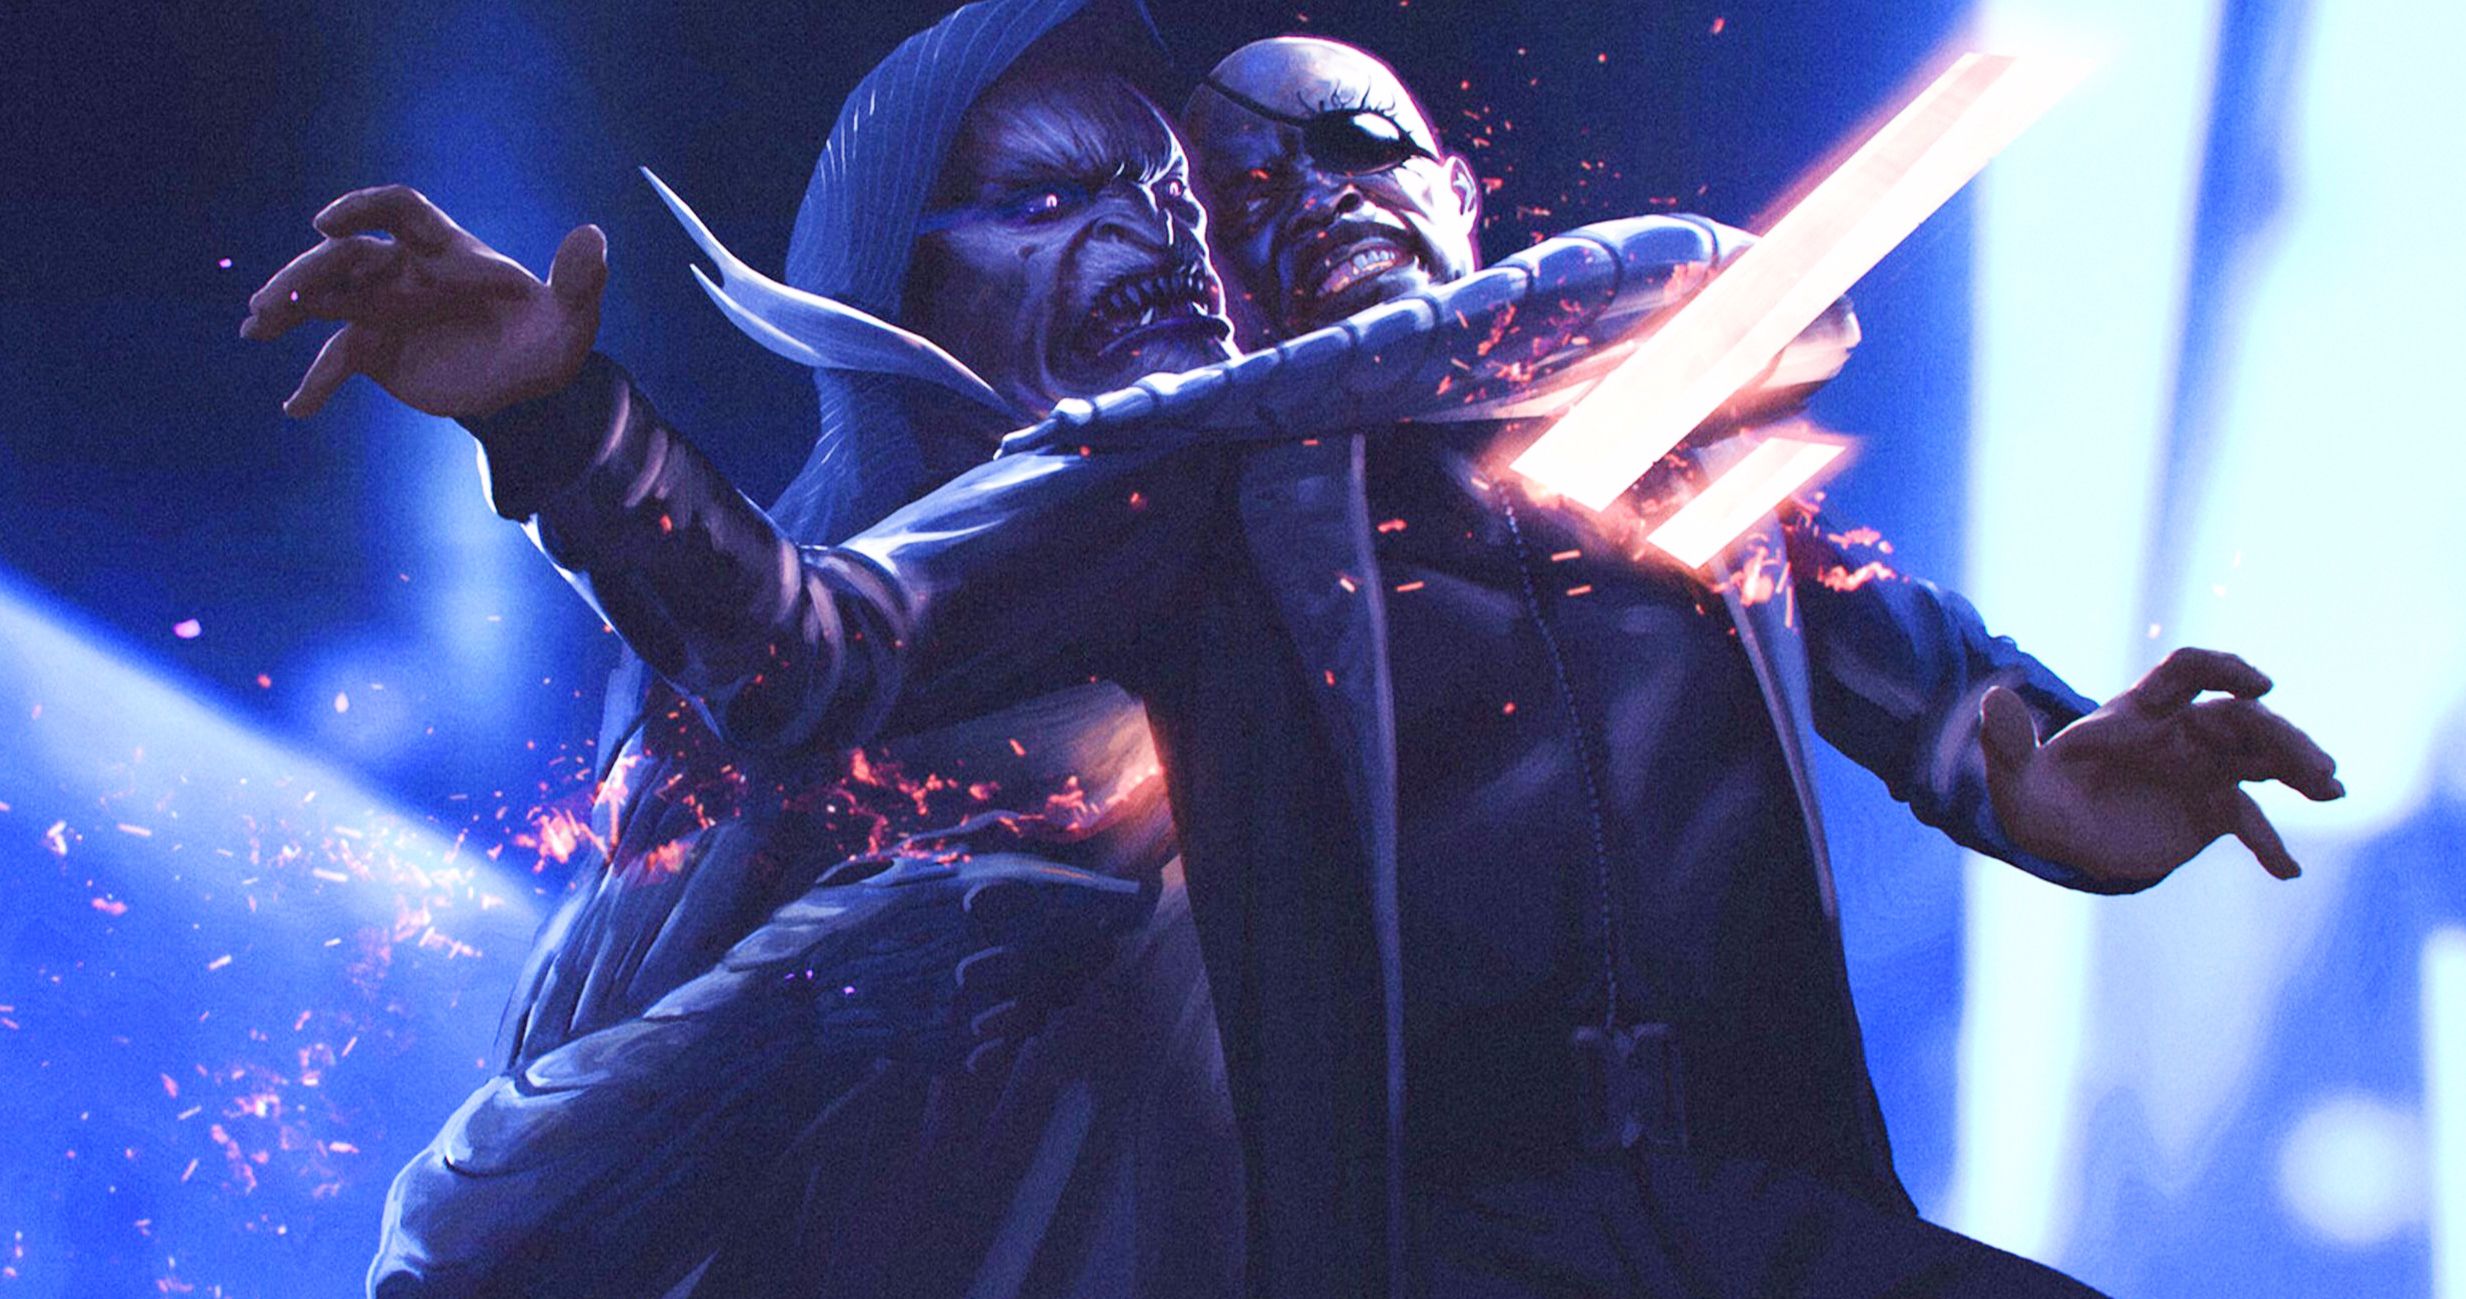 Corvus Glaive Kills Nick Fury In Wicked Avengers: Infinity War Concept Art